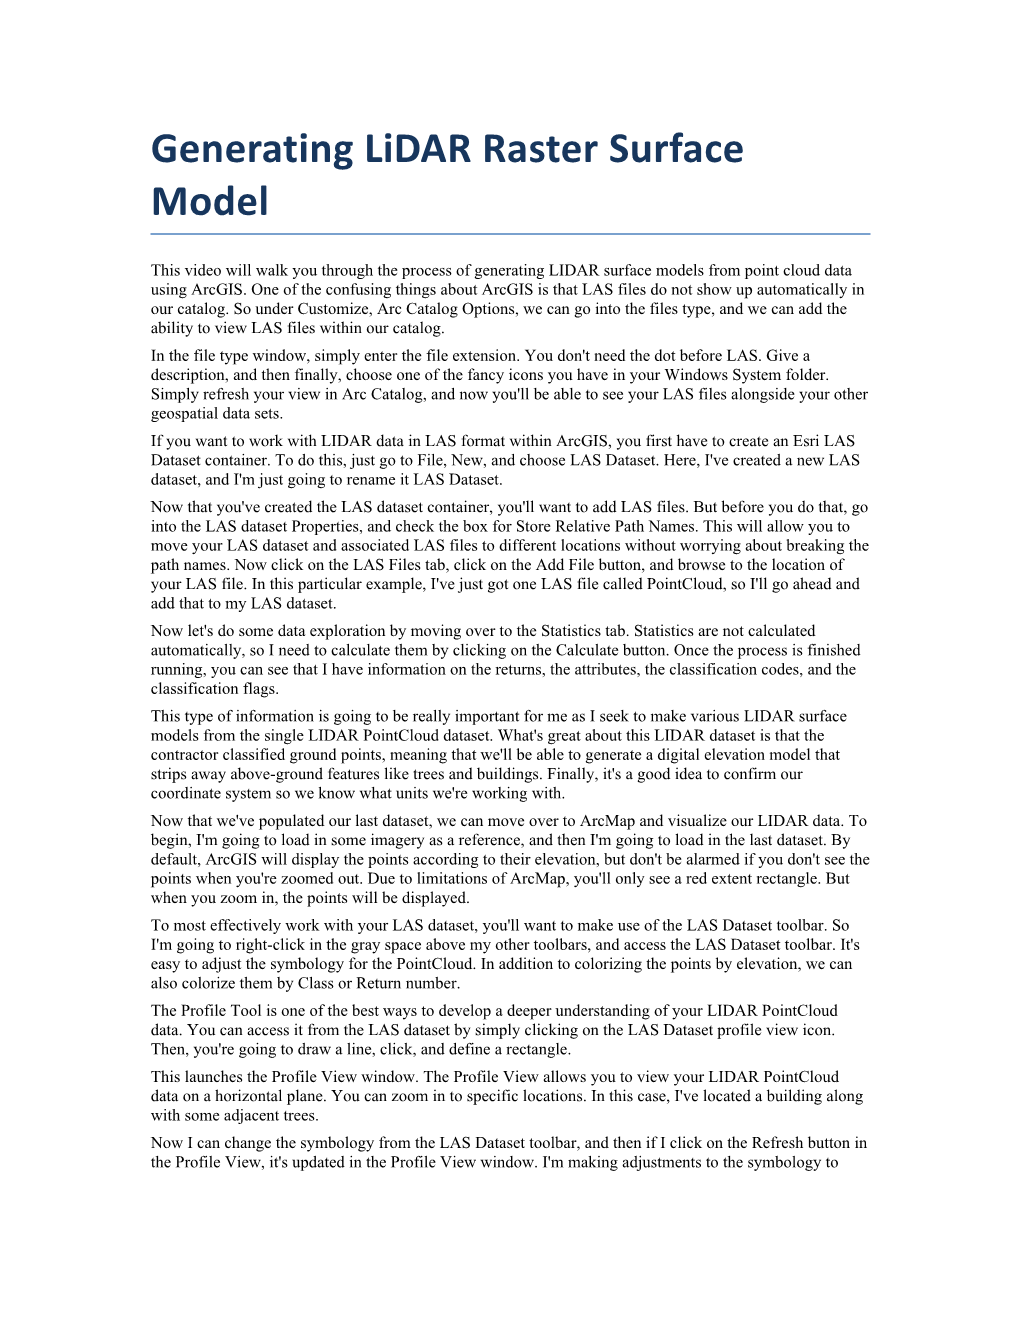 Generating Lidar Raster Surface Model